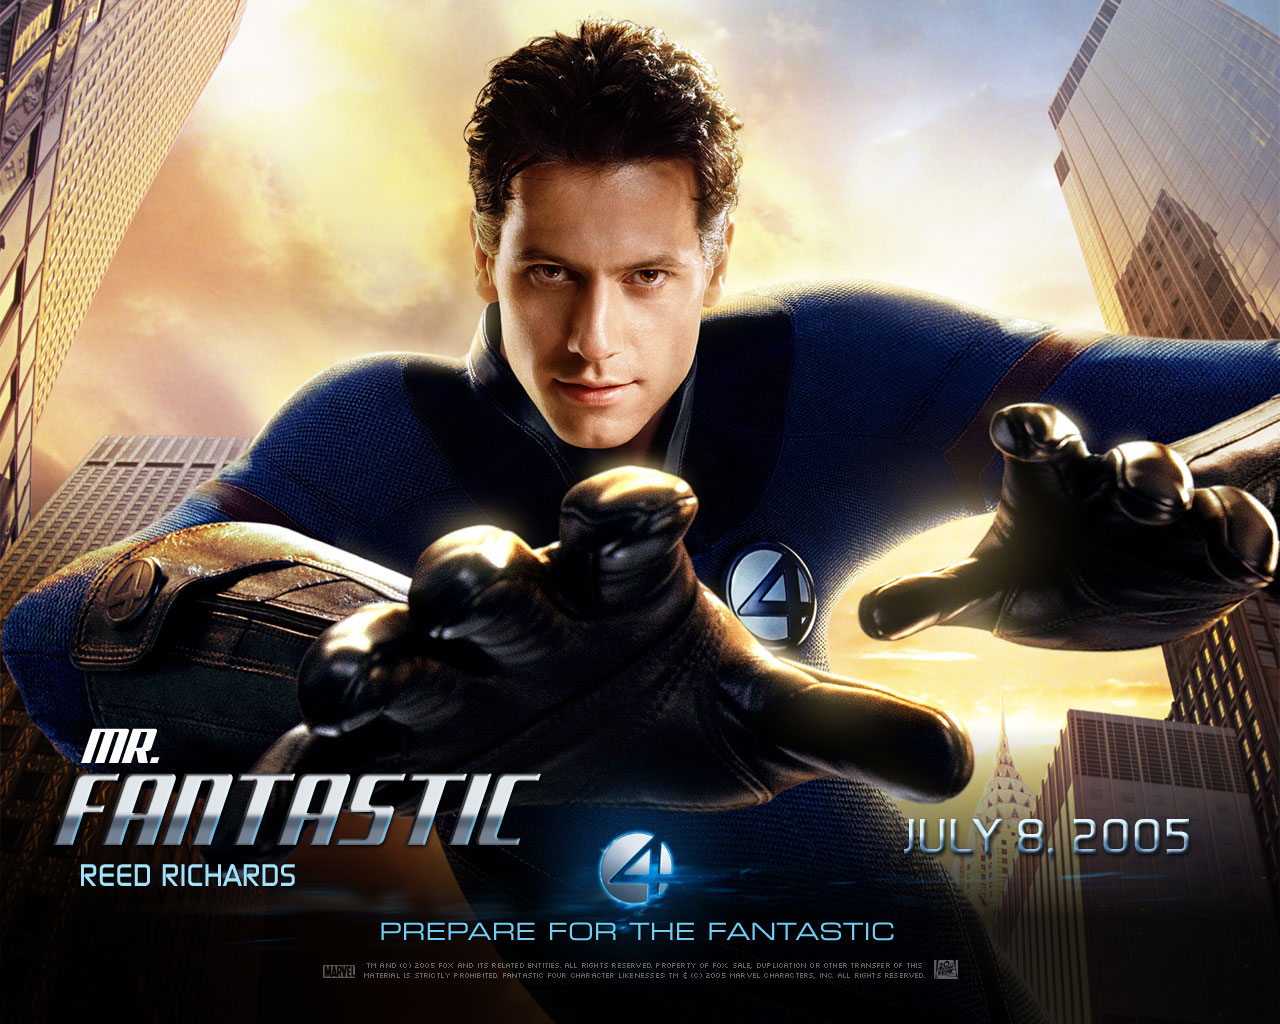 Fantastic Four Desktop Wallpaper For HD Widescreen And Mobile